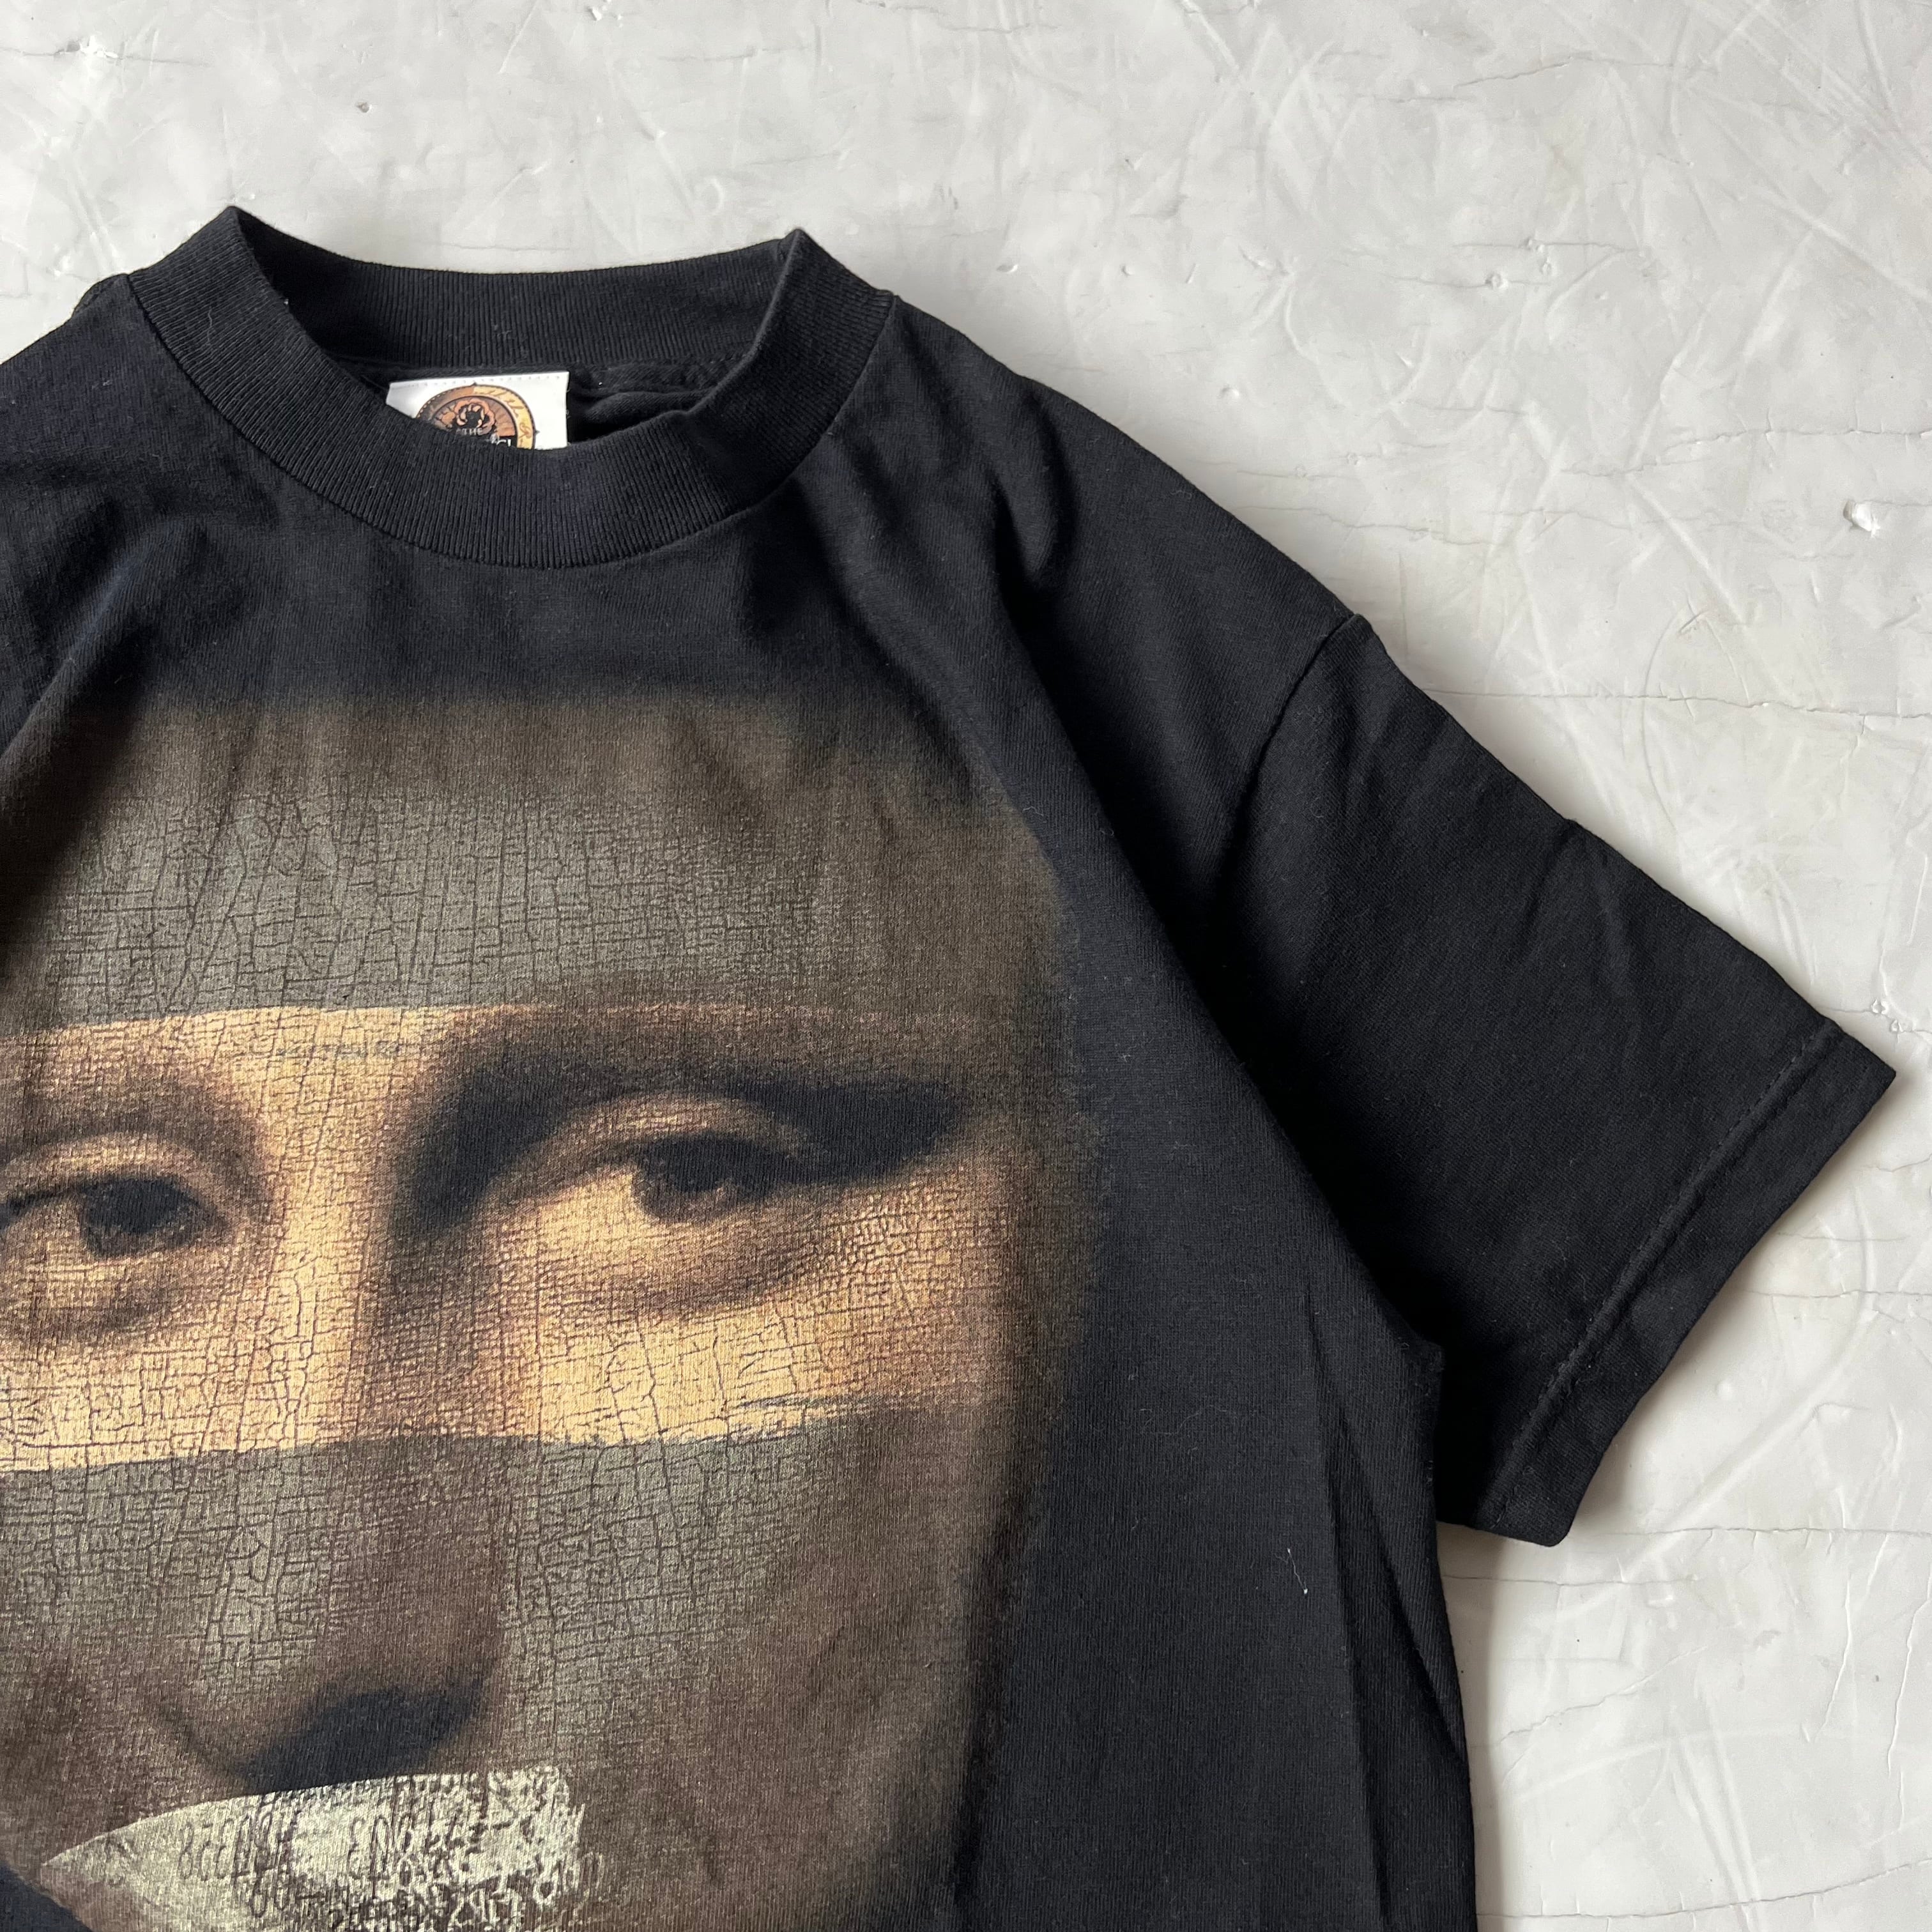 XLサイズ The Da Vinci Code ダヴィンチ コード Tシャツ